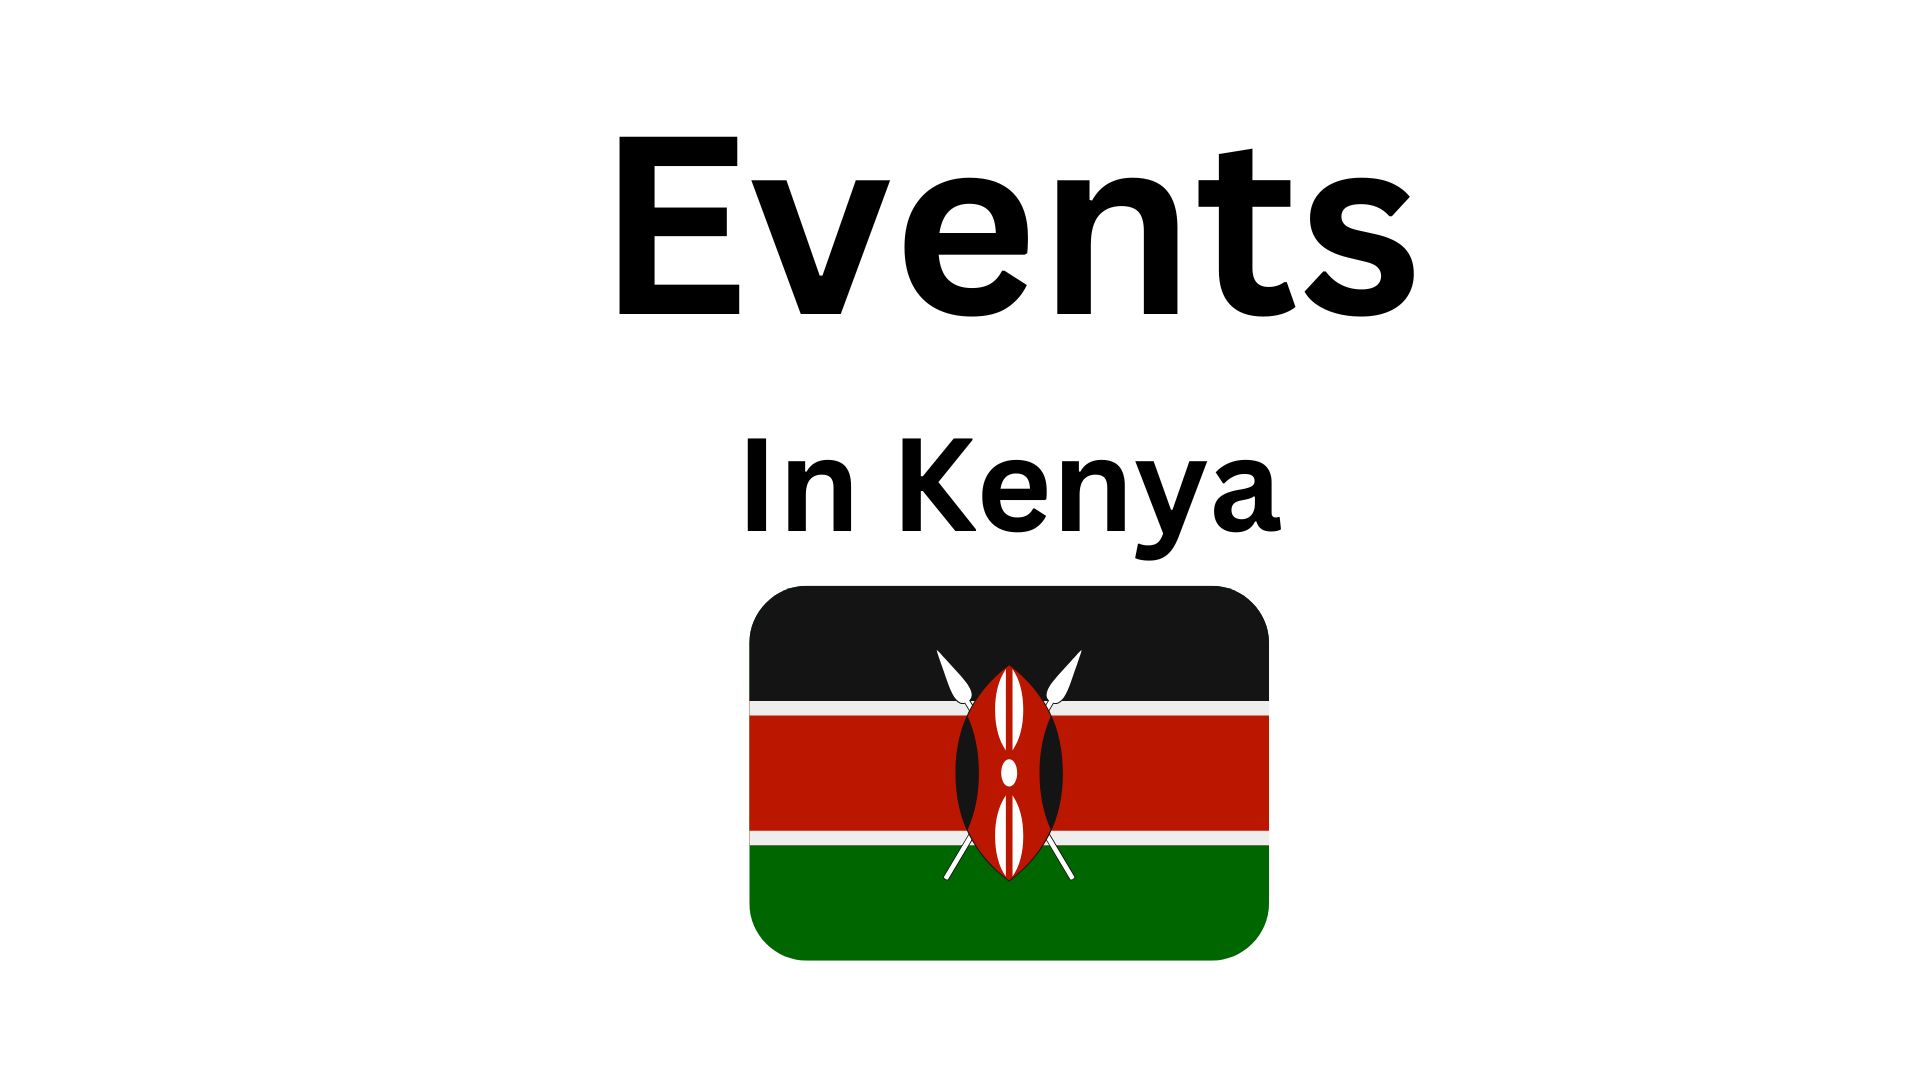 Events in Kenya